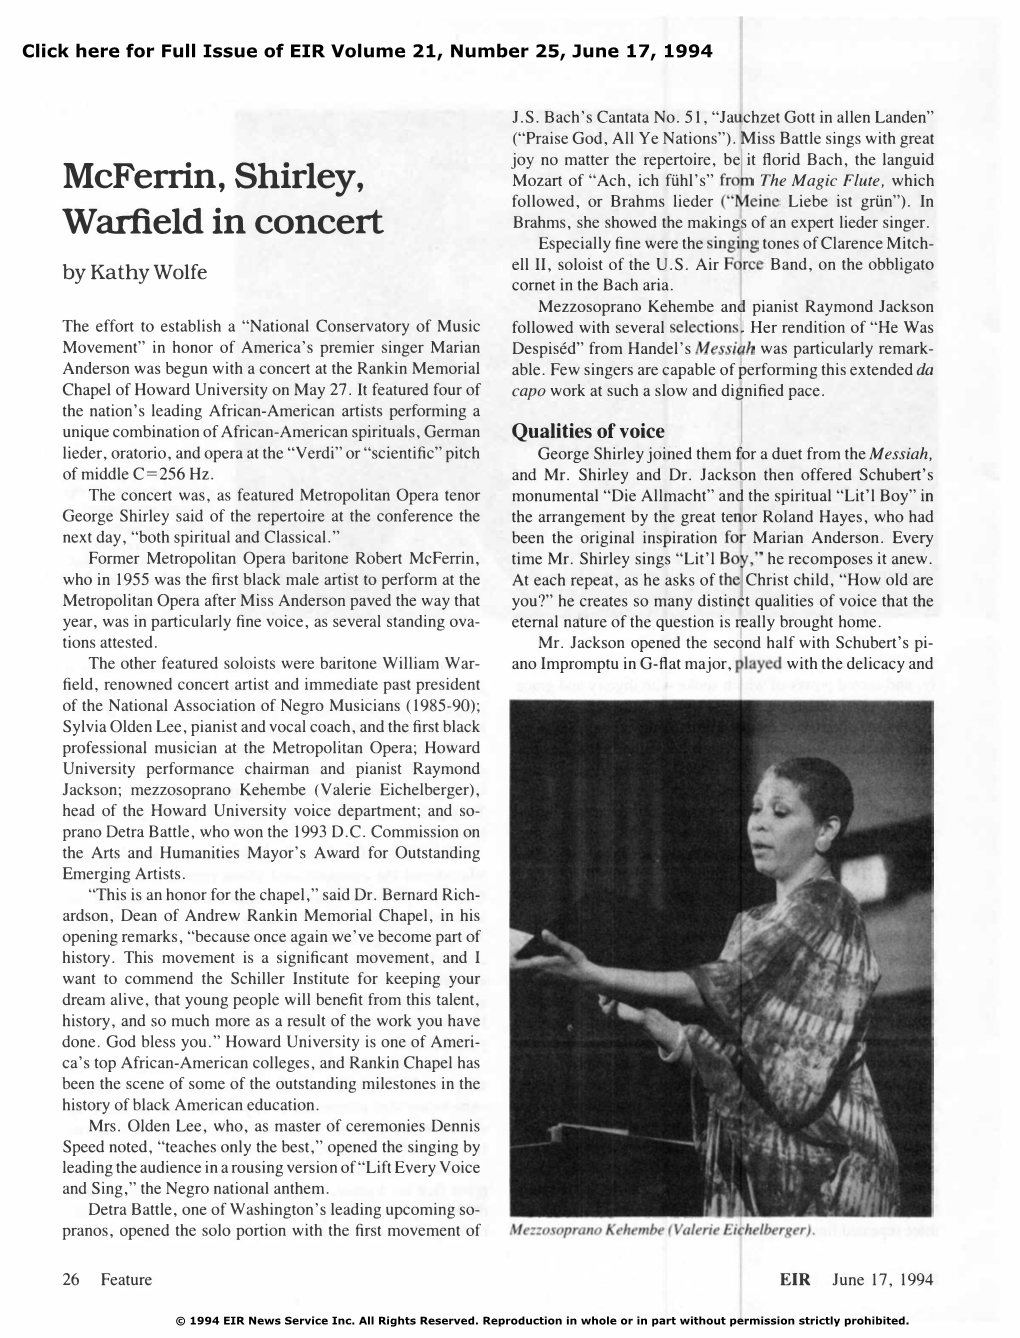 Mcferrin, Shirley, Warfield in Concert